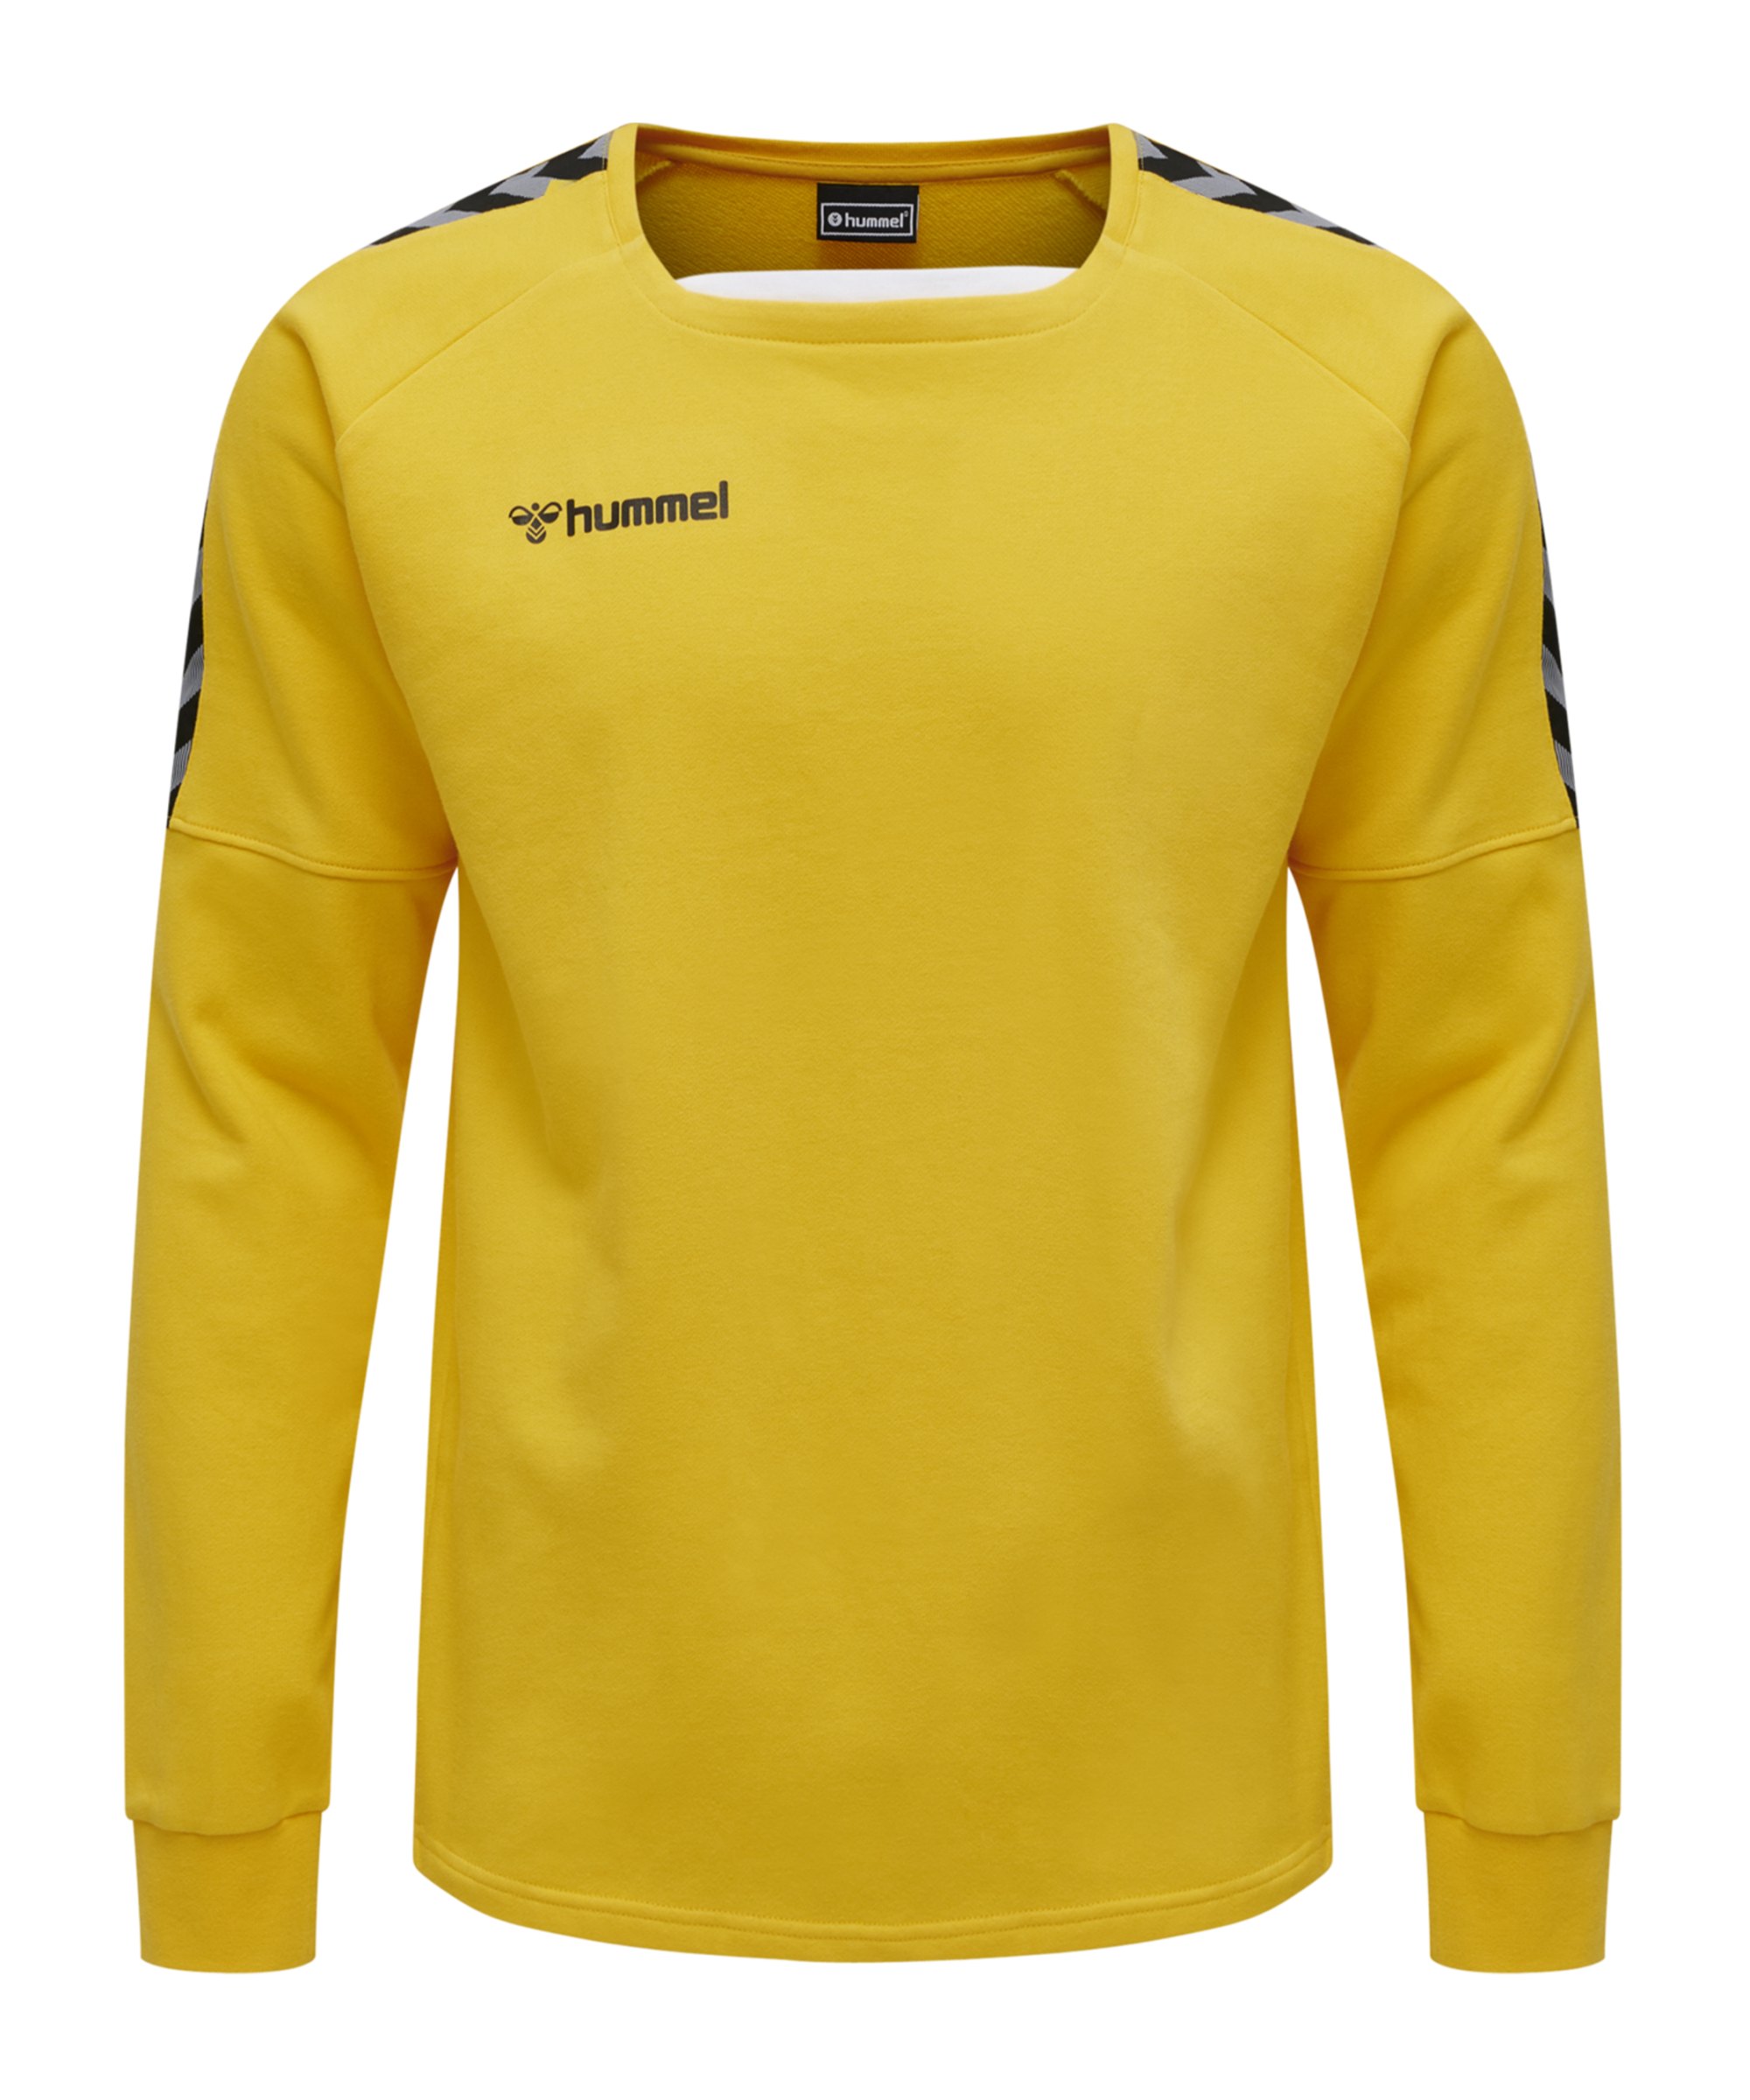 Hummel Authentic Training Sweatshirt F5001 - gelb